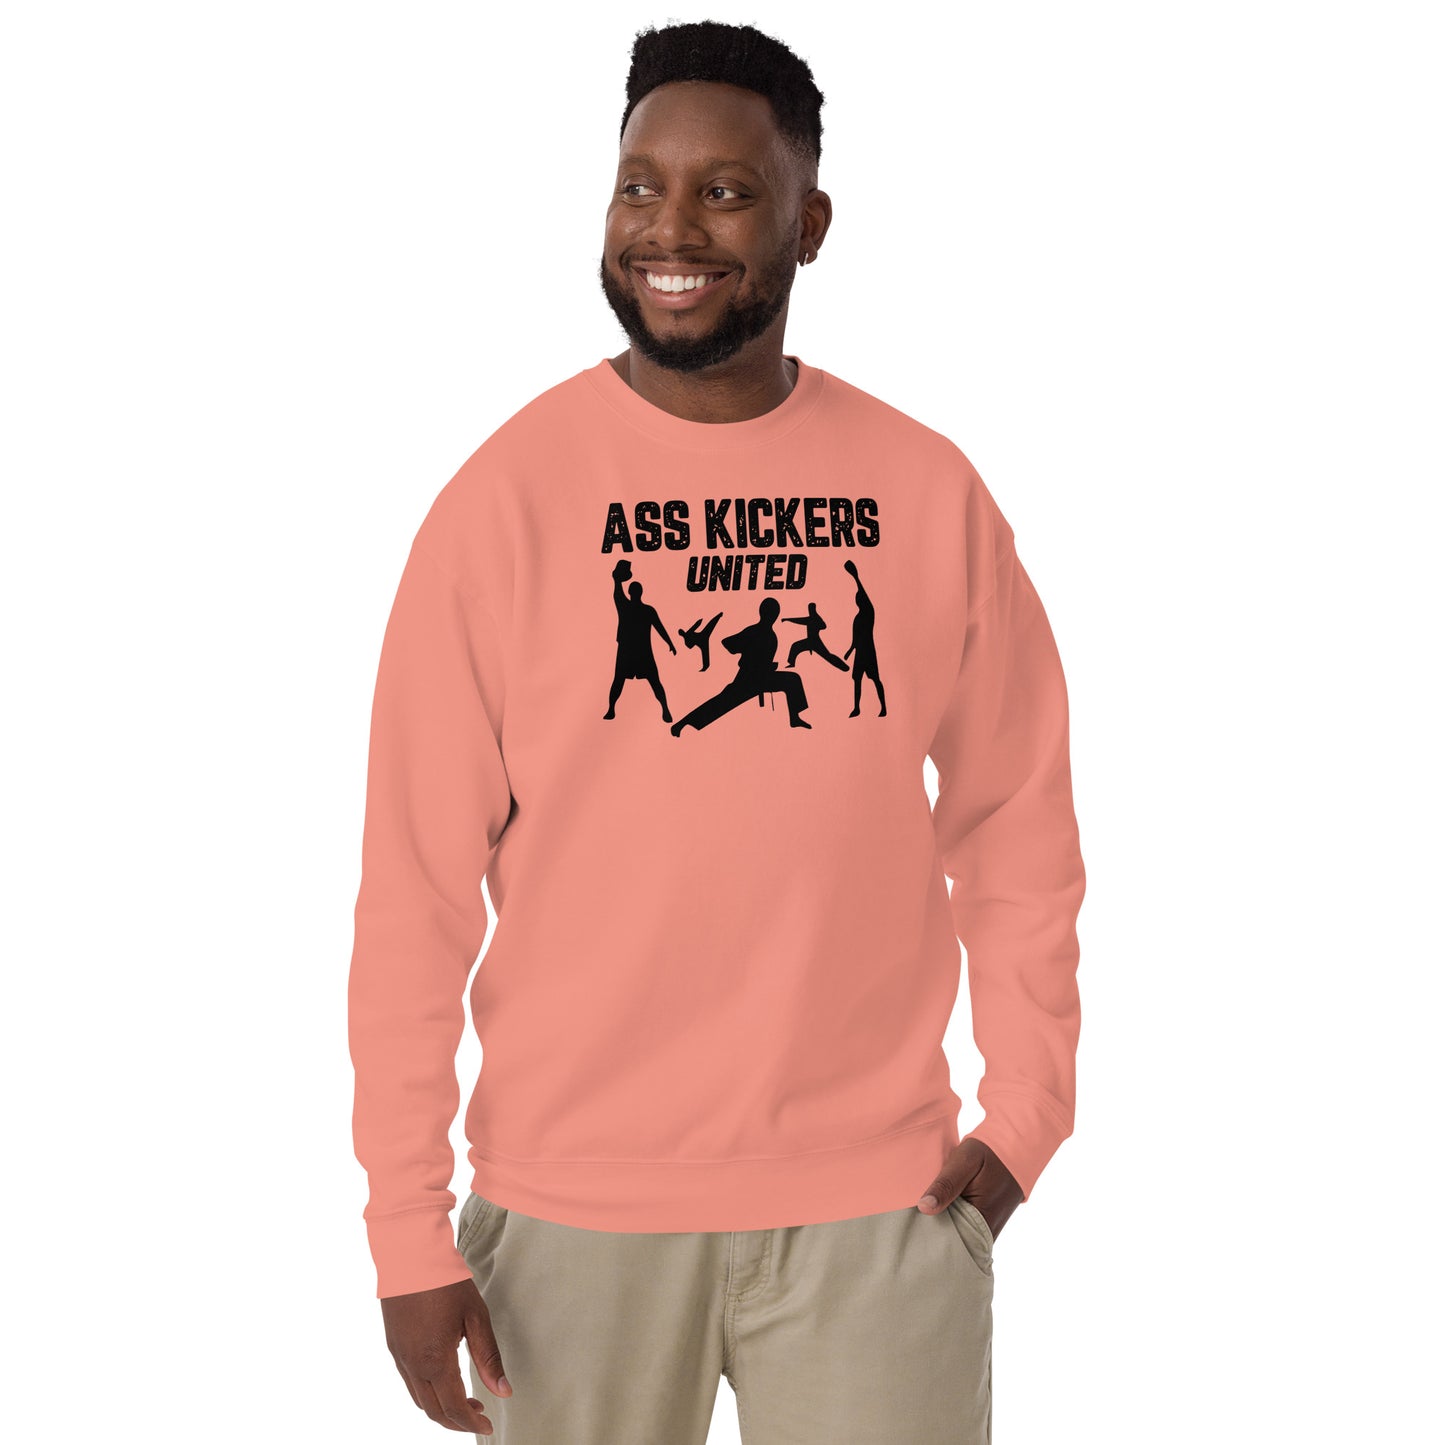 AssKickers United Unisex Premium Sweatshirt